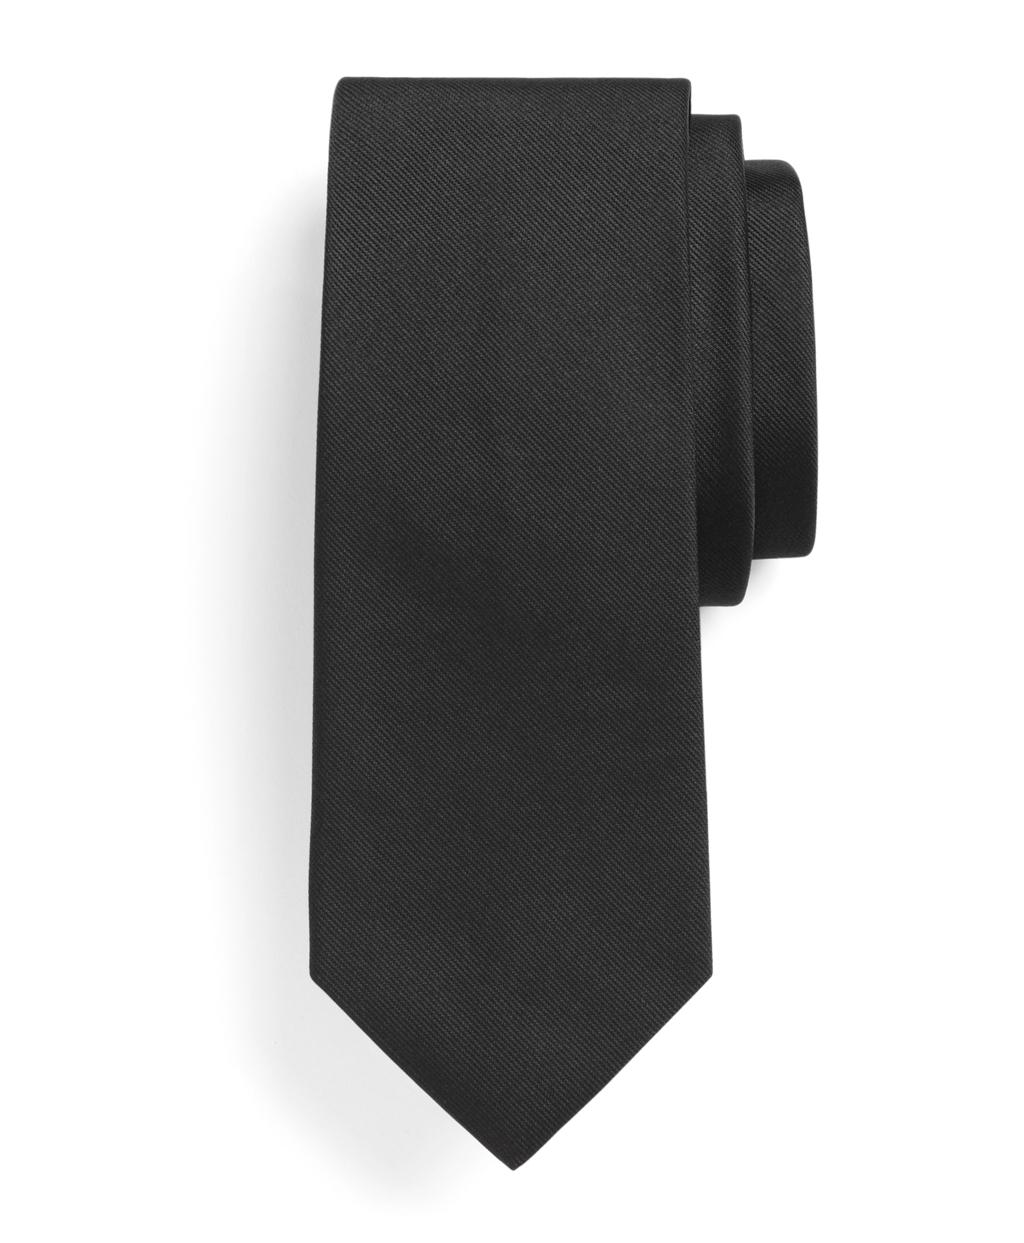 Brooks Brothers Fleece Solid Slim Tie in Black for Men - Lyst